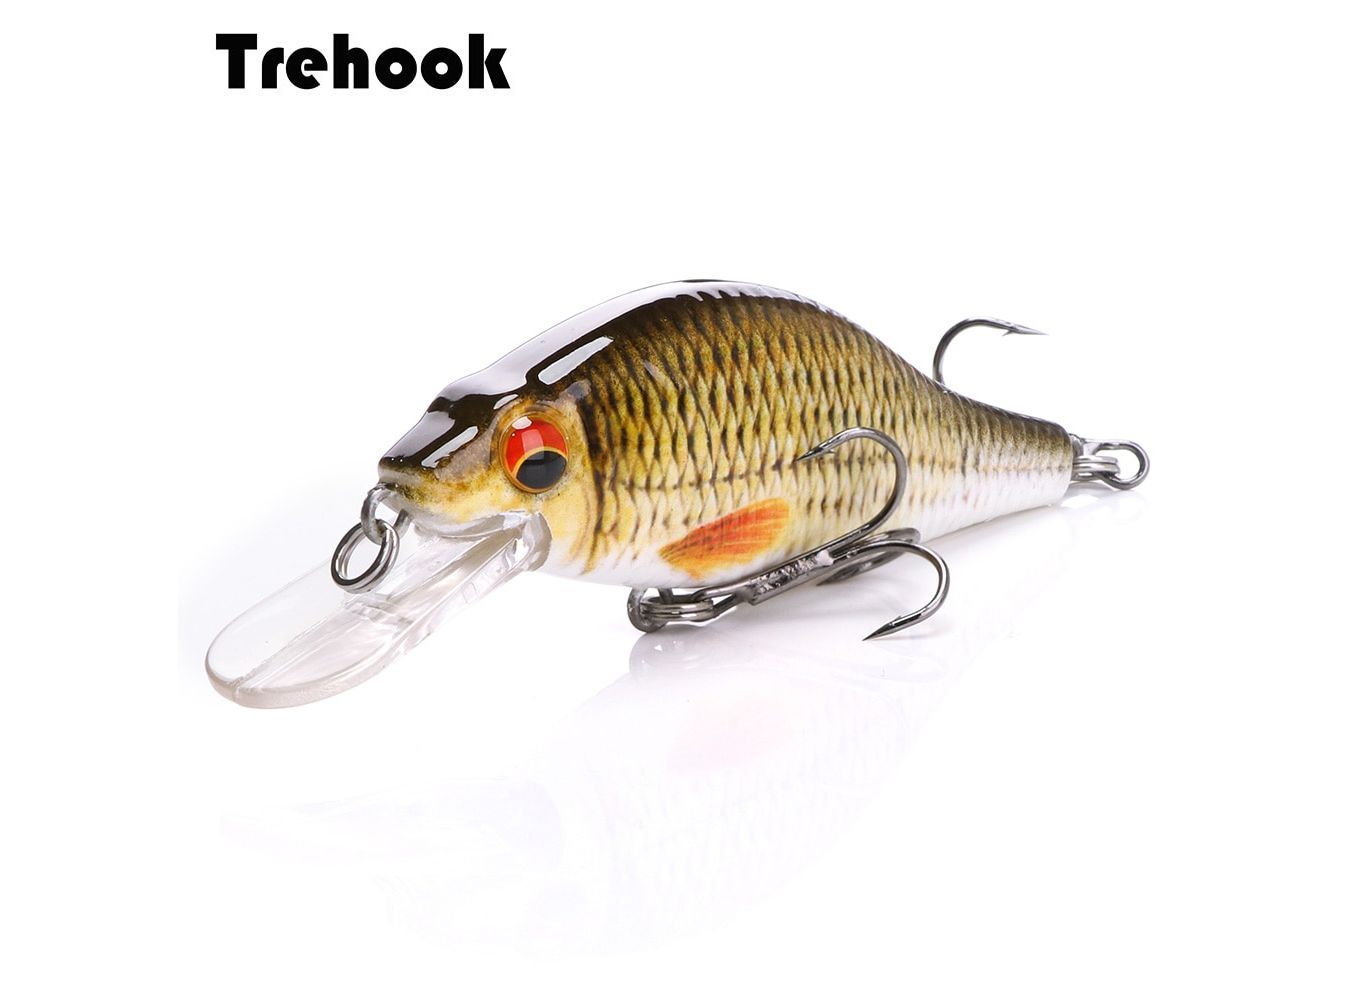 https://protechshop.co.uk/images/thumbnails/1357/1000/detailed/29/TREHOOK-4g-11g-22g-Black-Minnow-Wobblers-Pike-Fishing-Lure-Artificial-Bait-Hard-Swimbait-Mini-Crankbaits.jpg